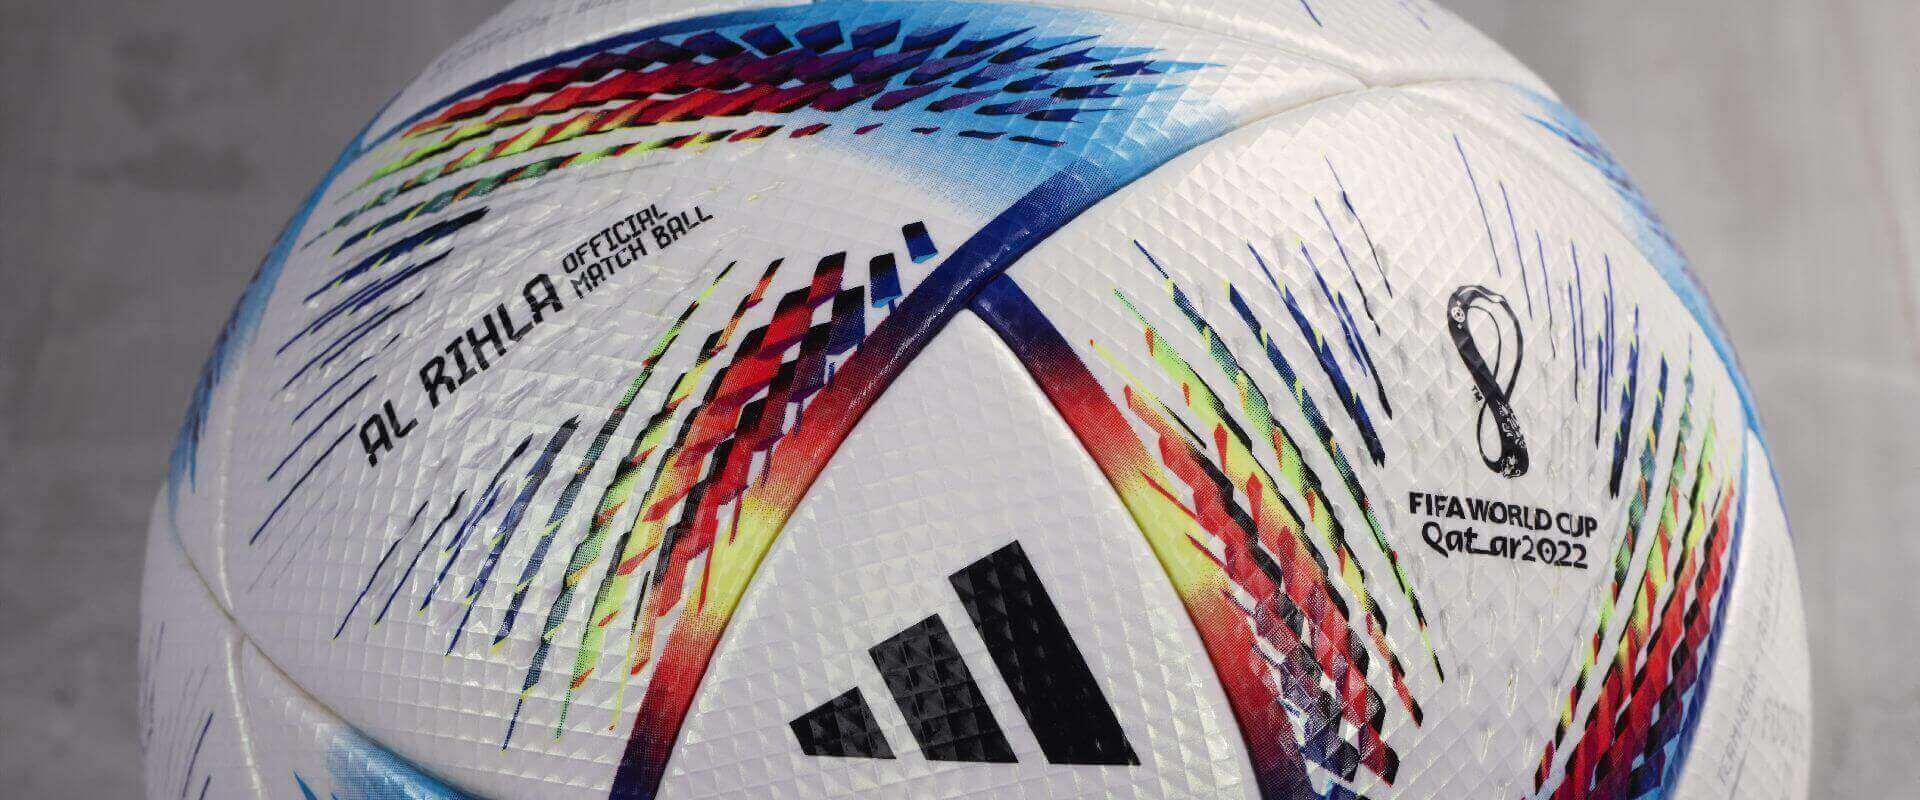 Adidas WM Ball 2022